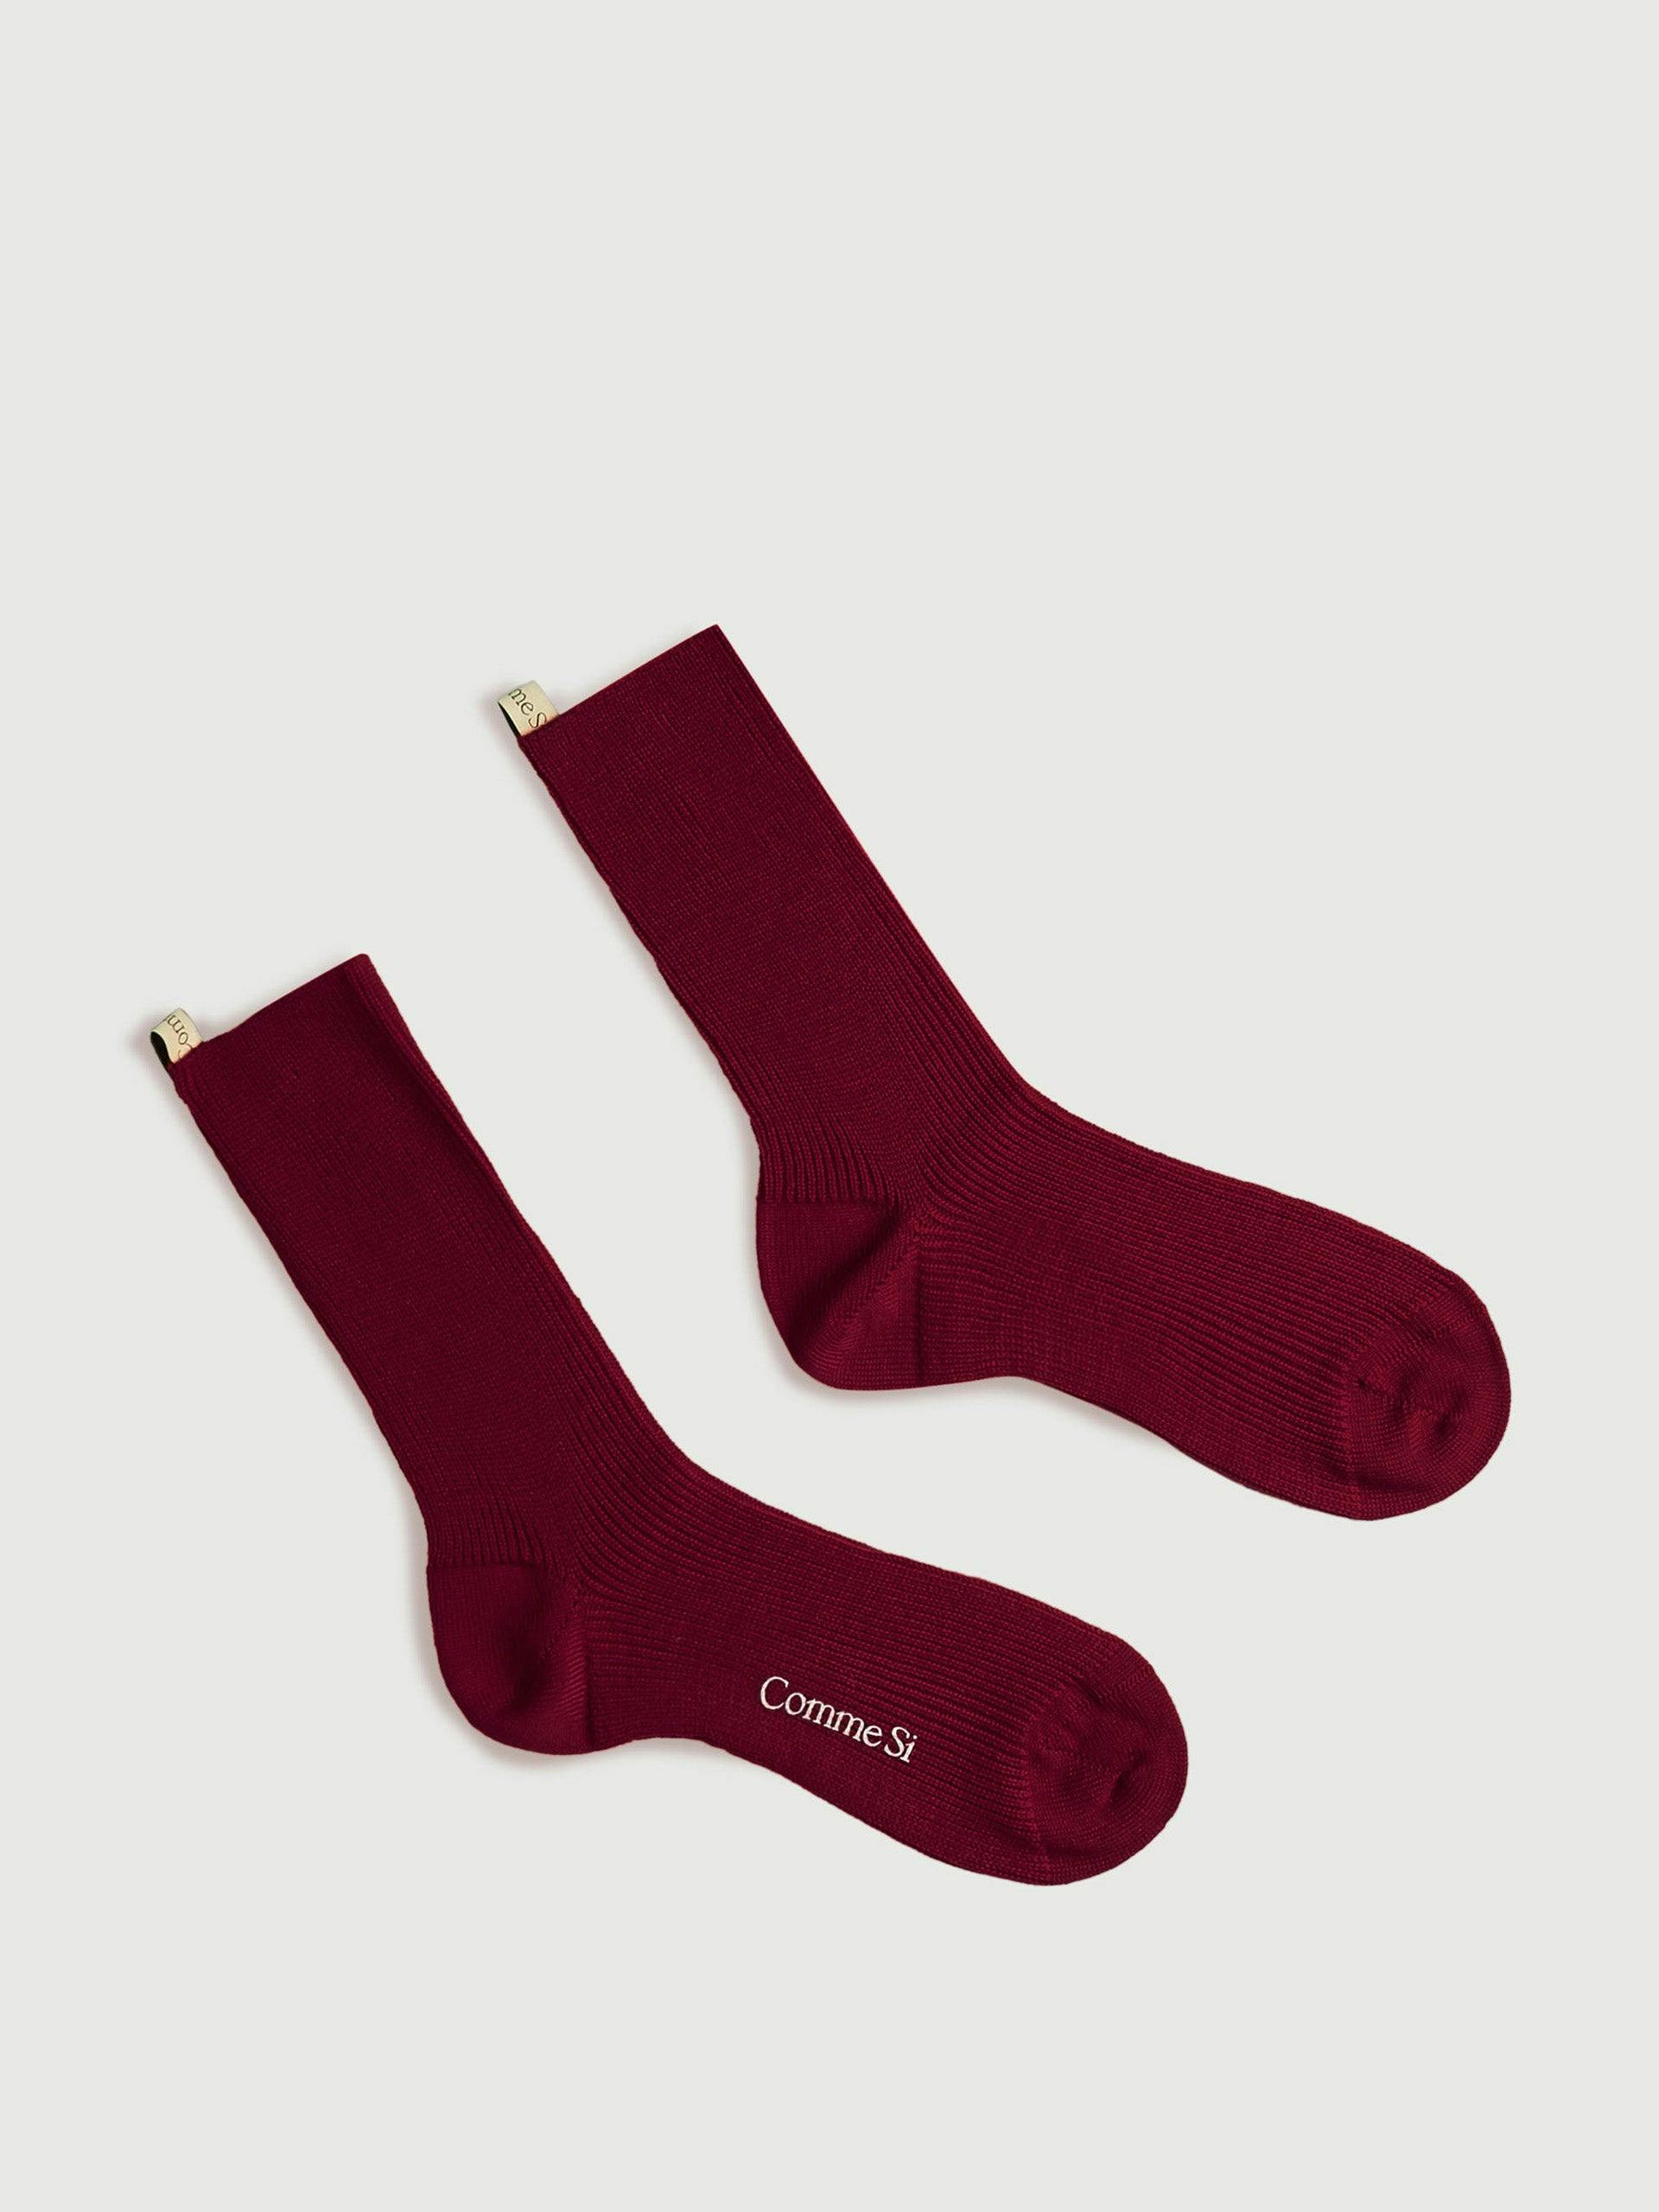 The merino socks